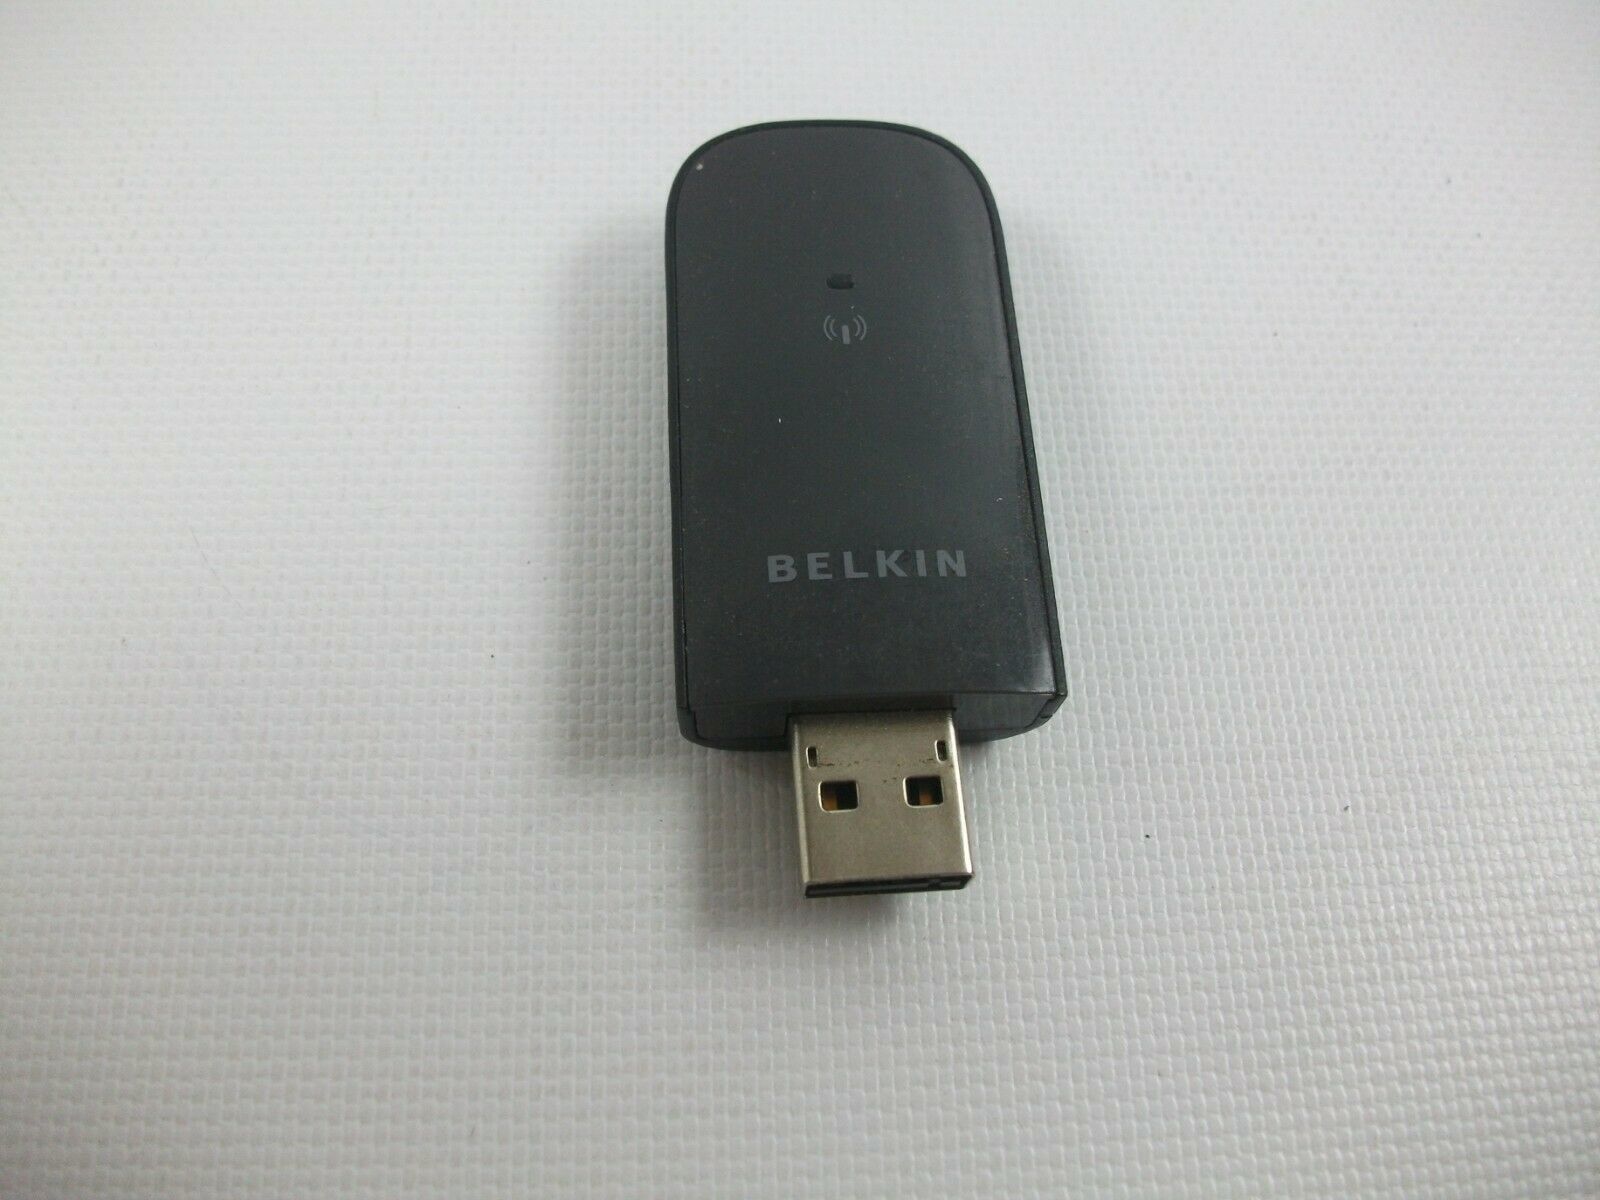 Belkin F6D4050 V1 Enhanced Wireless USB Adapter Not Fully Tested - $15.09